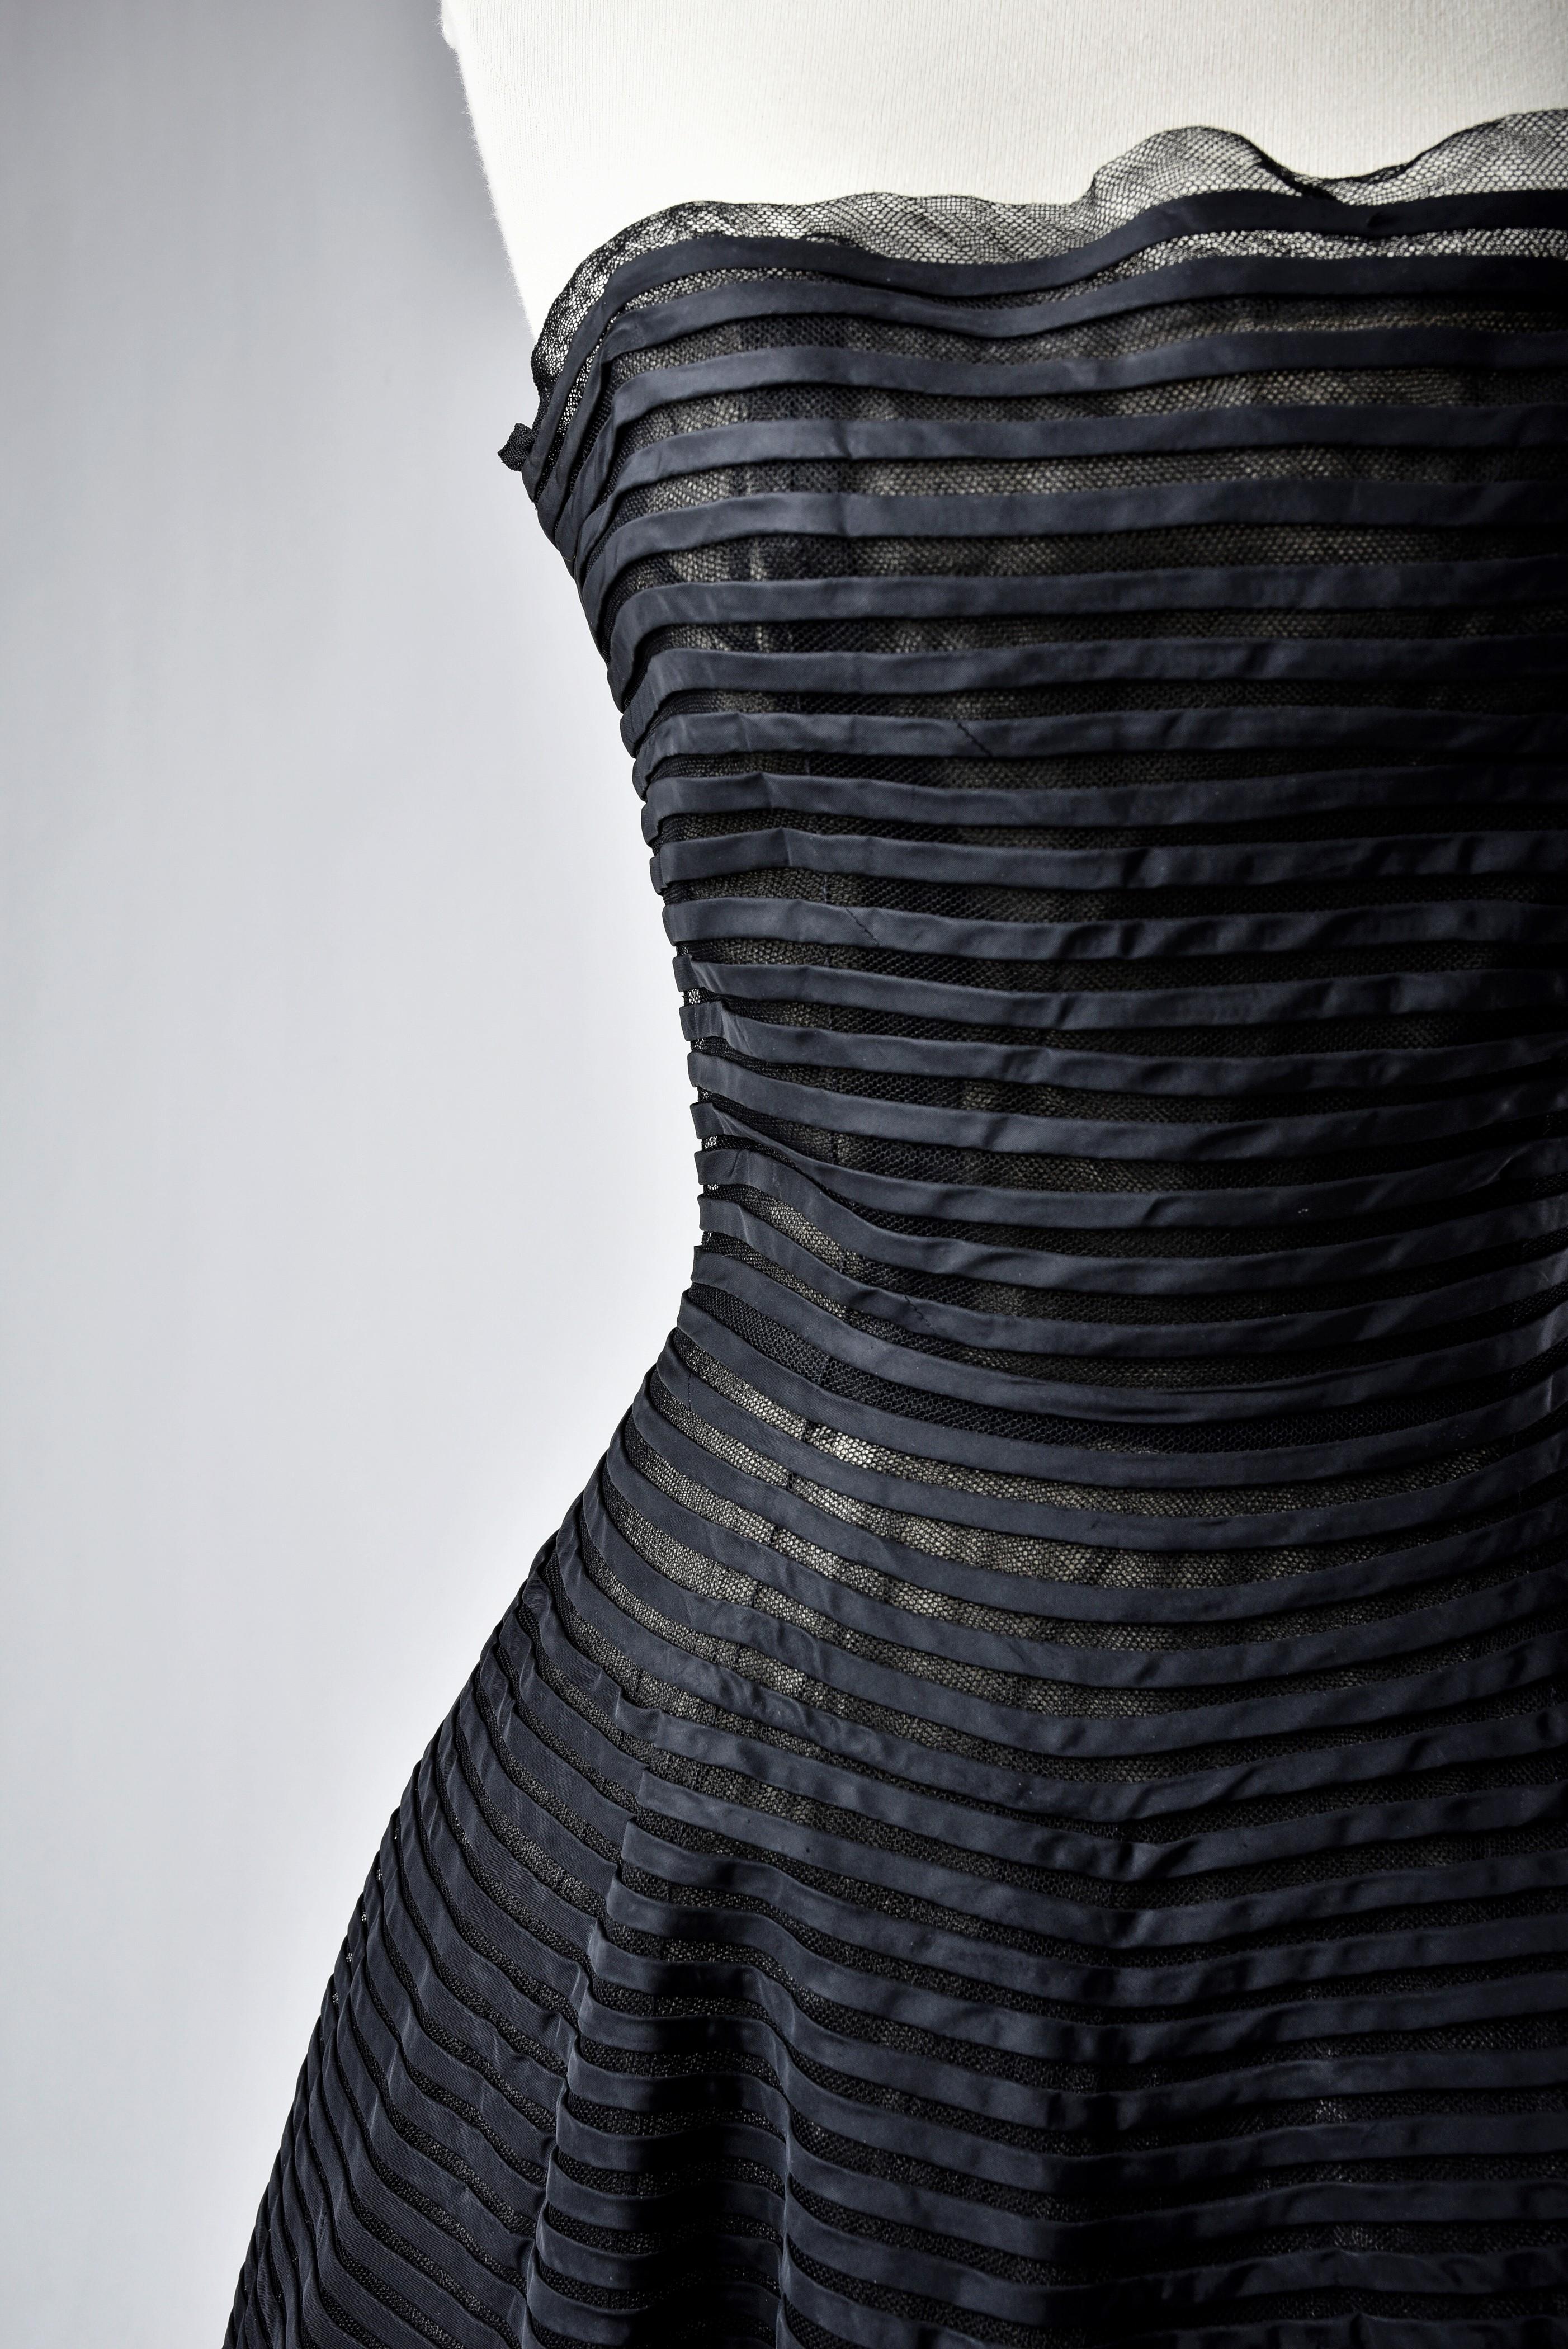 Christian Dior Ball Gown in black tulle & satin appliqué N° 363404 Circa 1955 1